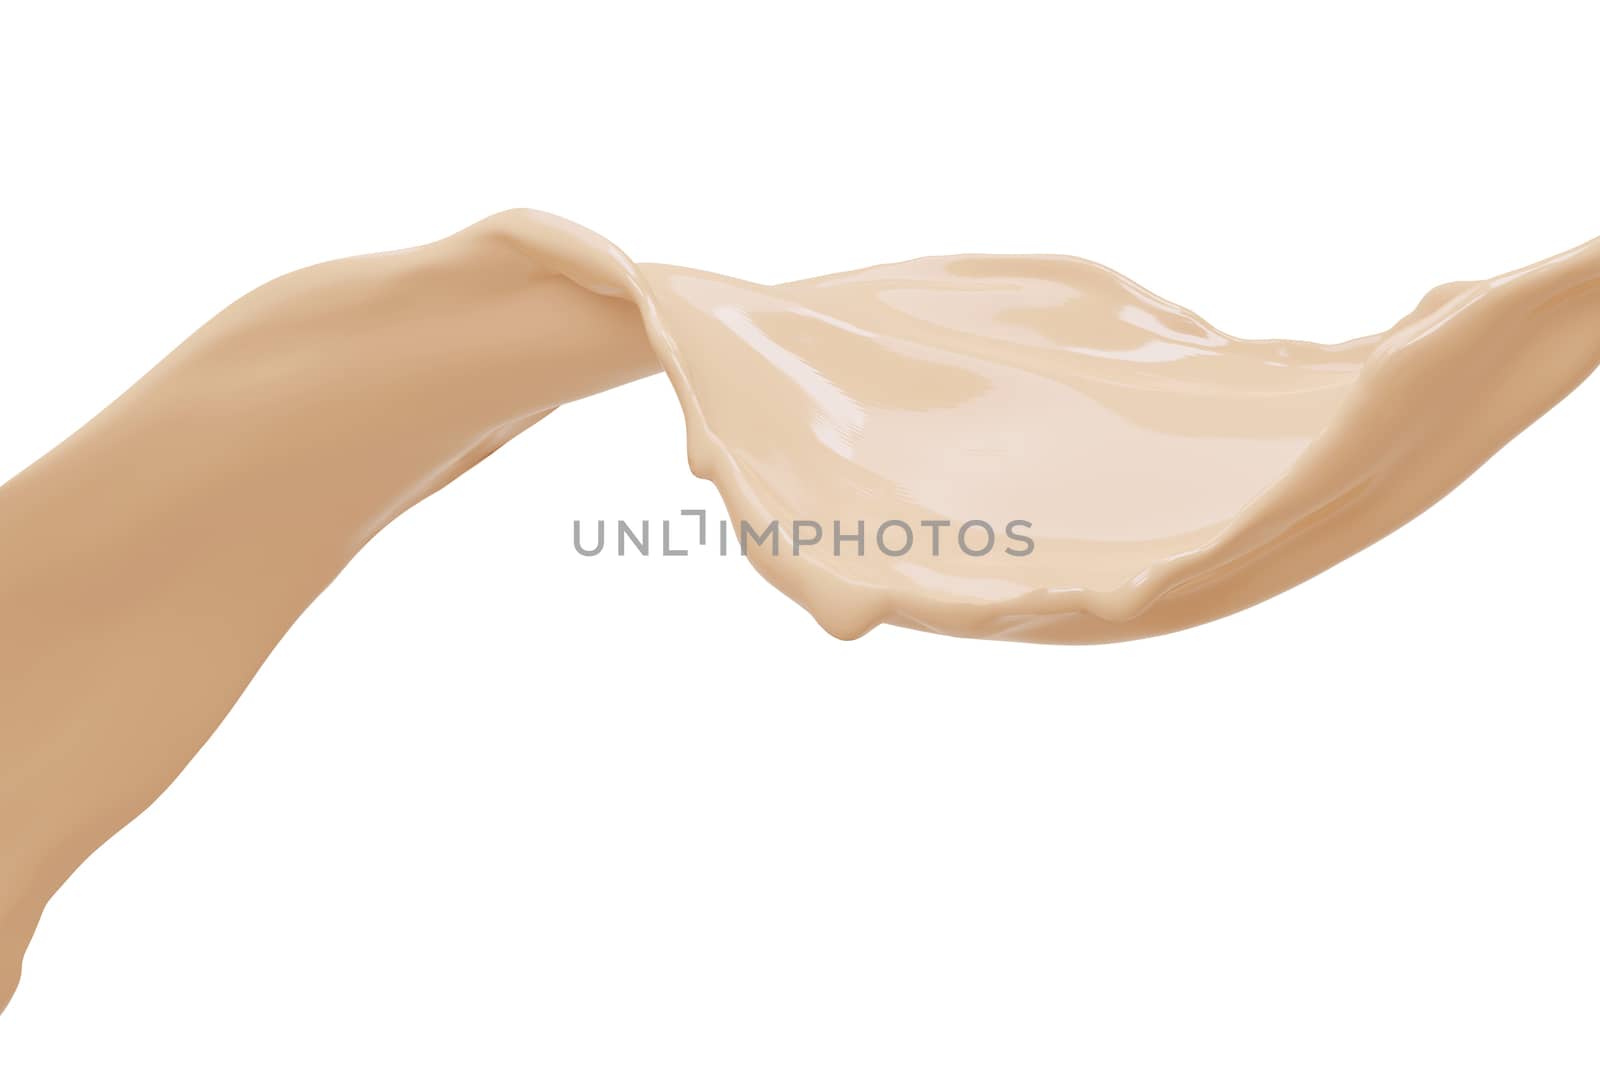 Cream foundation splash isolated on white background 3d render by Myimagine